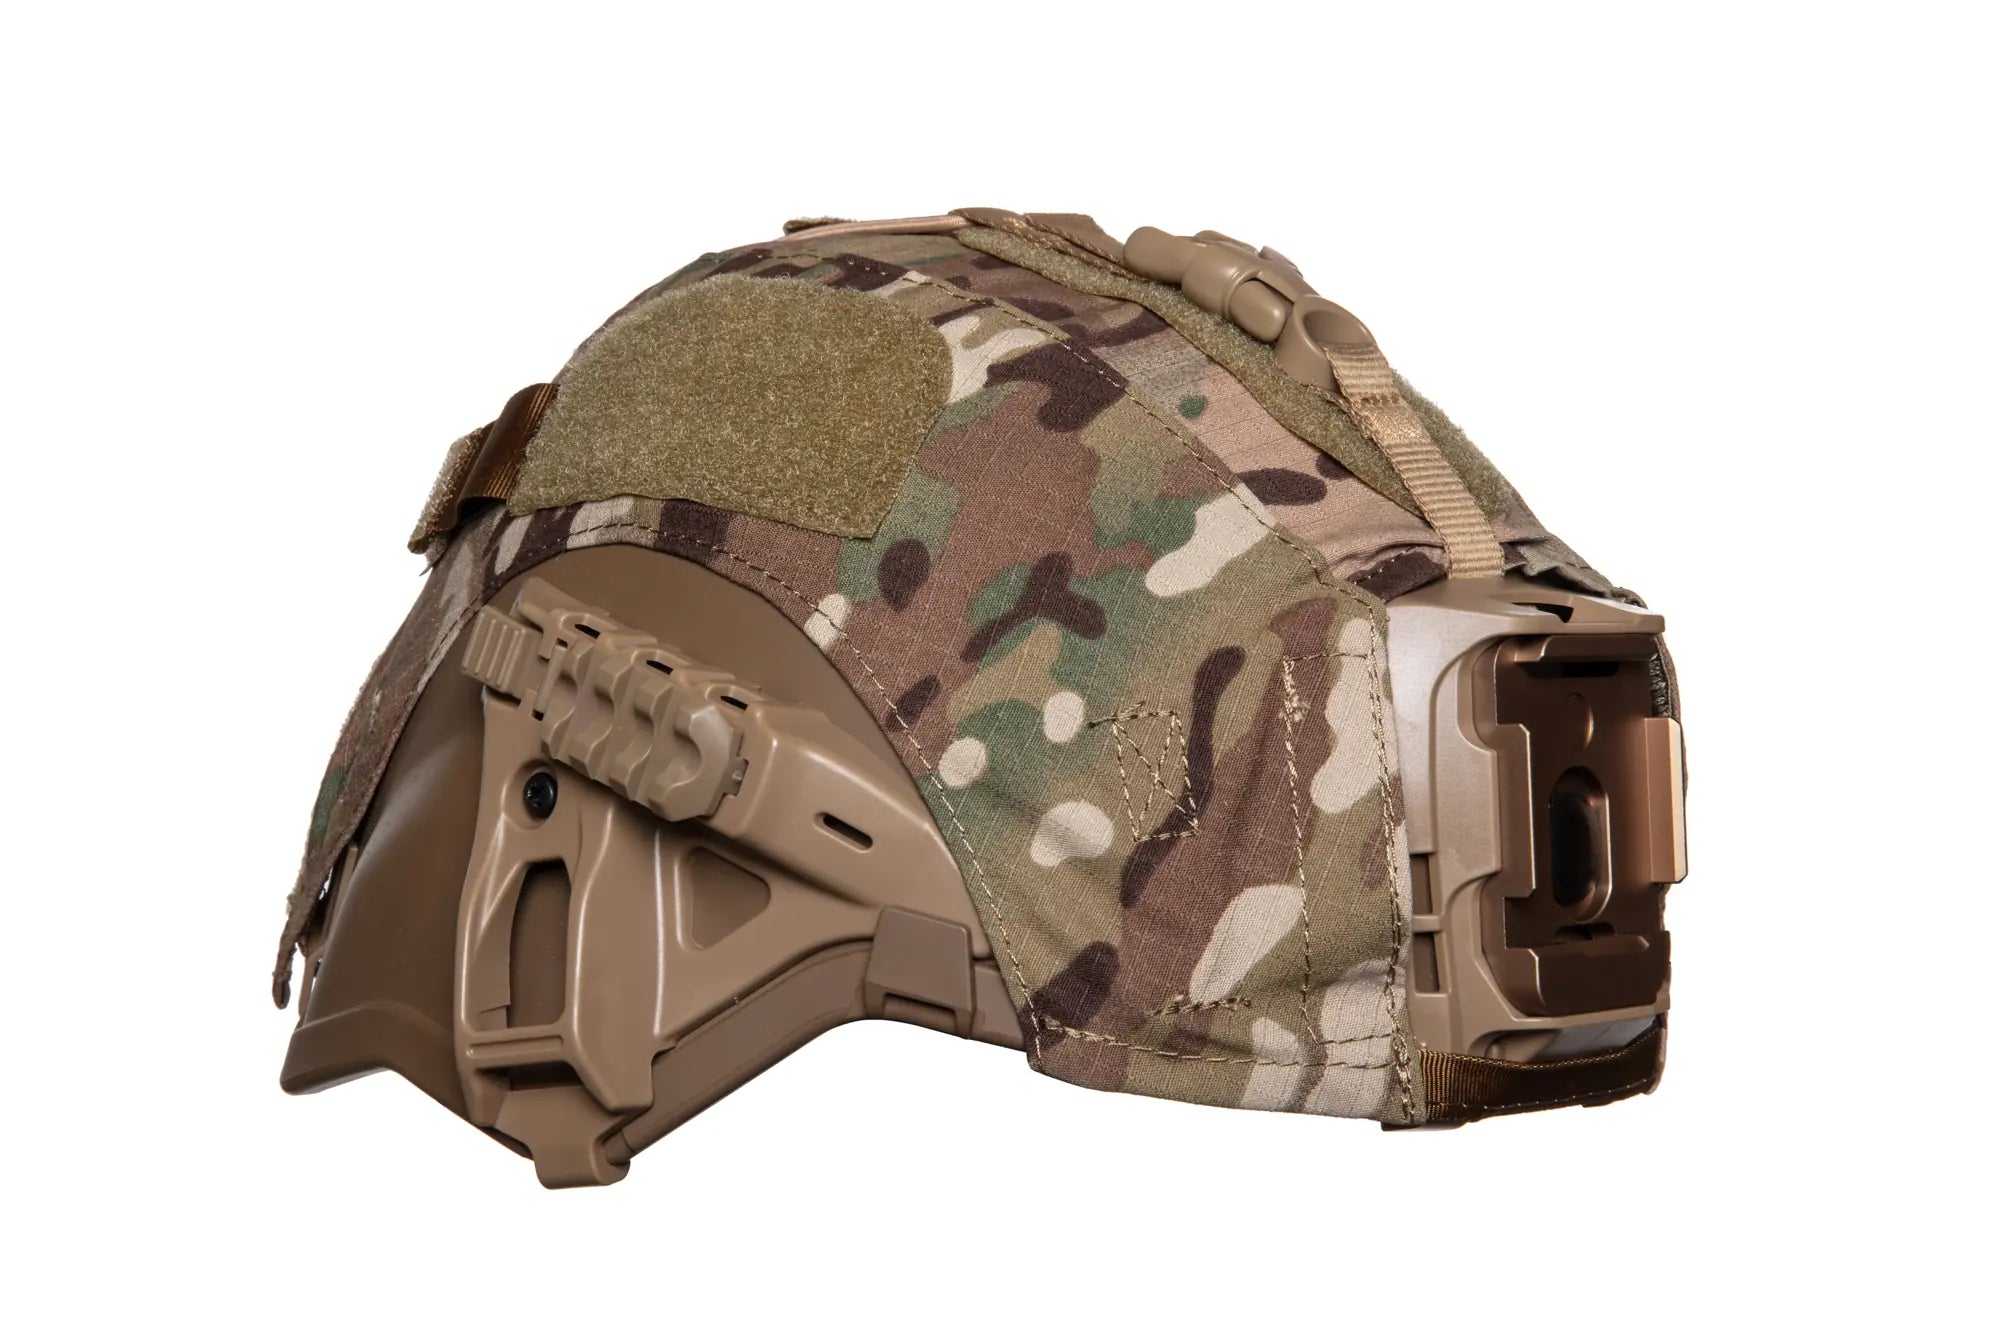 Replica helmet FMA Integrated Head Protection System Multicam-1